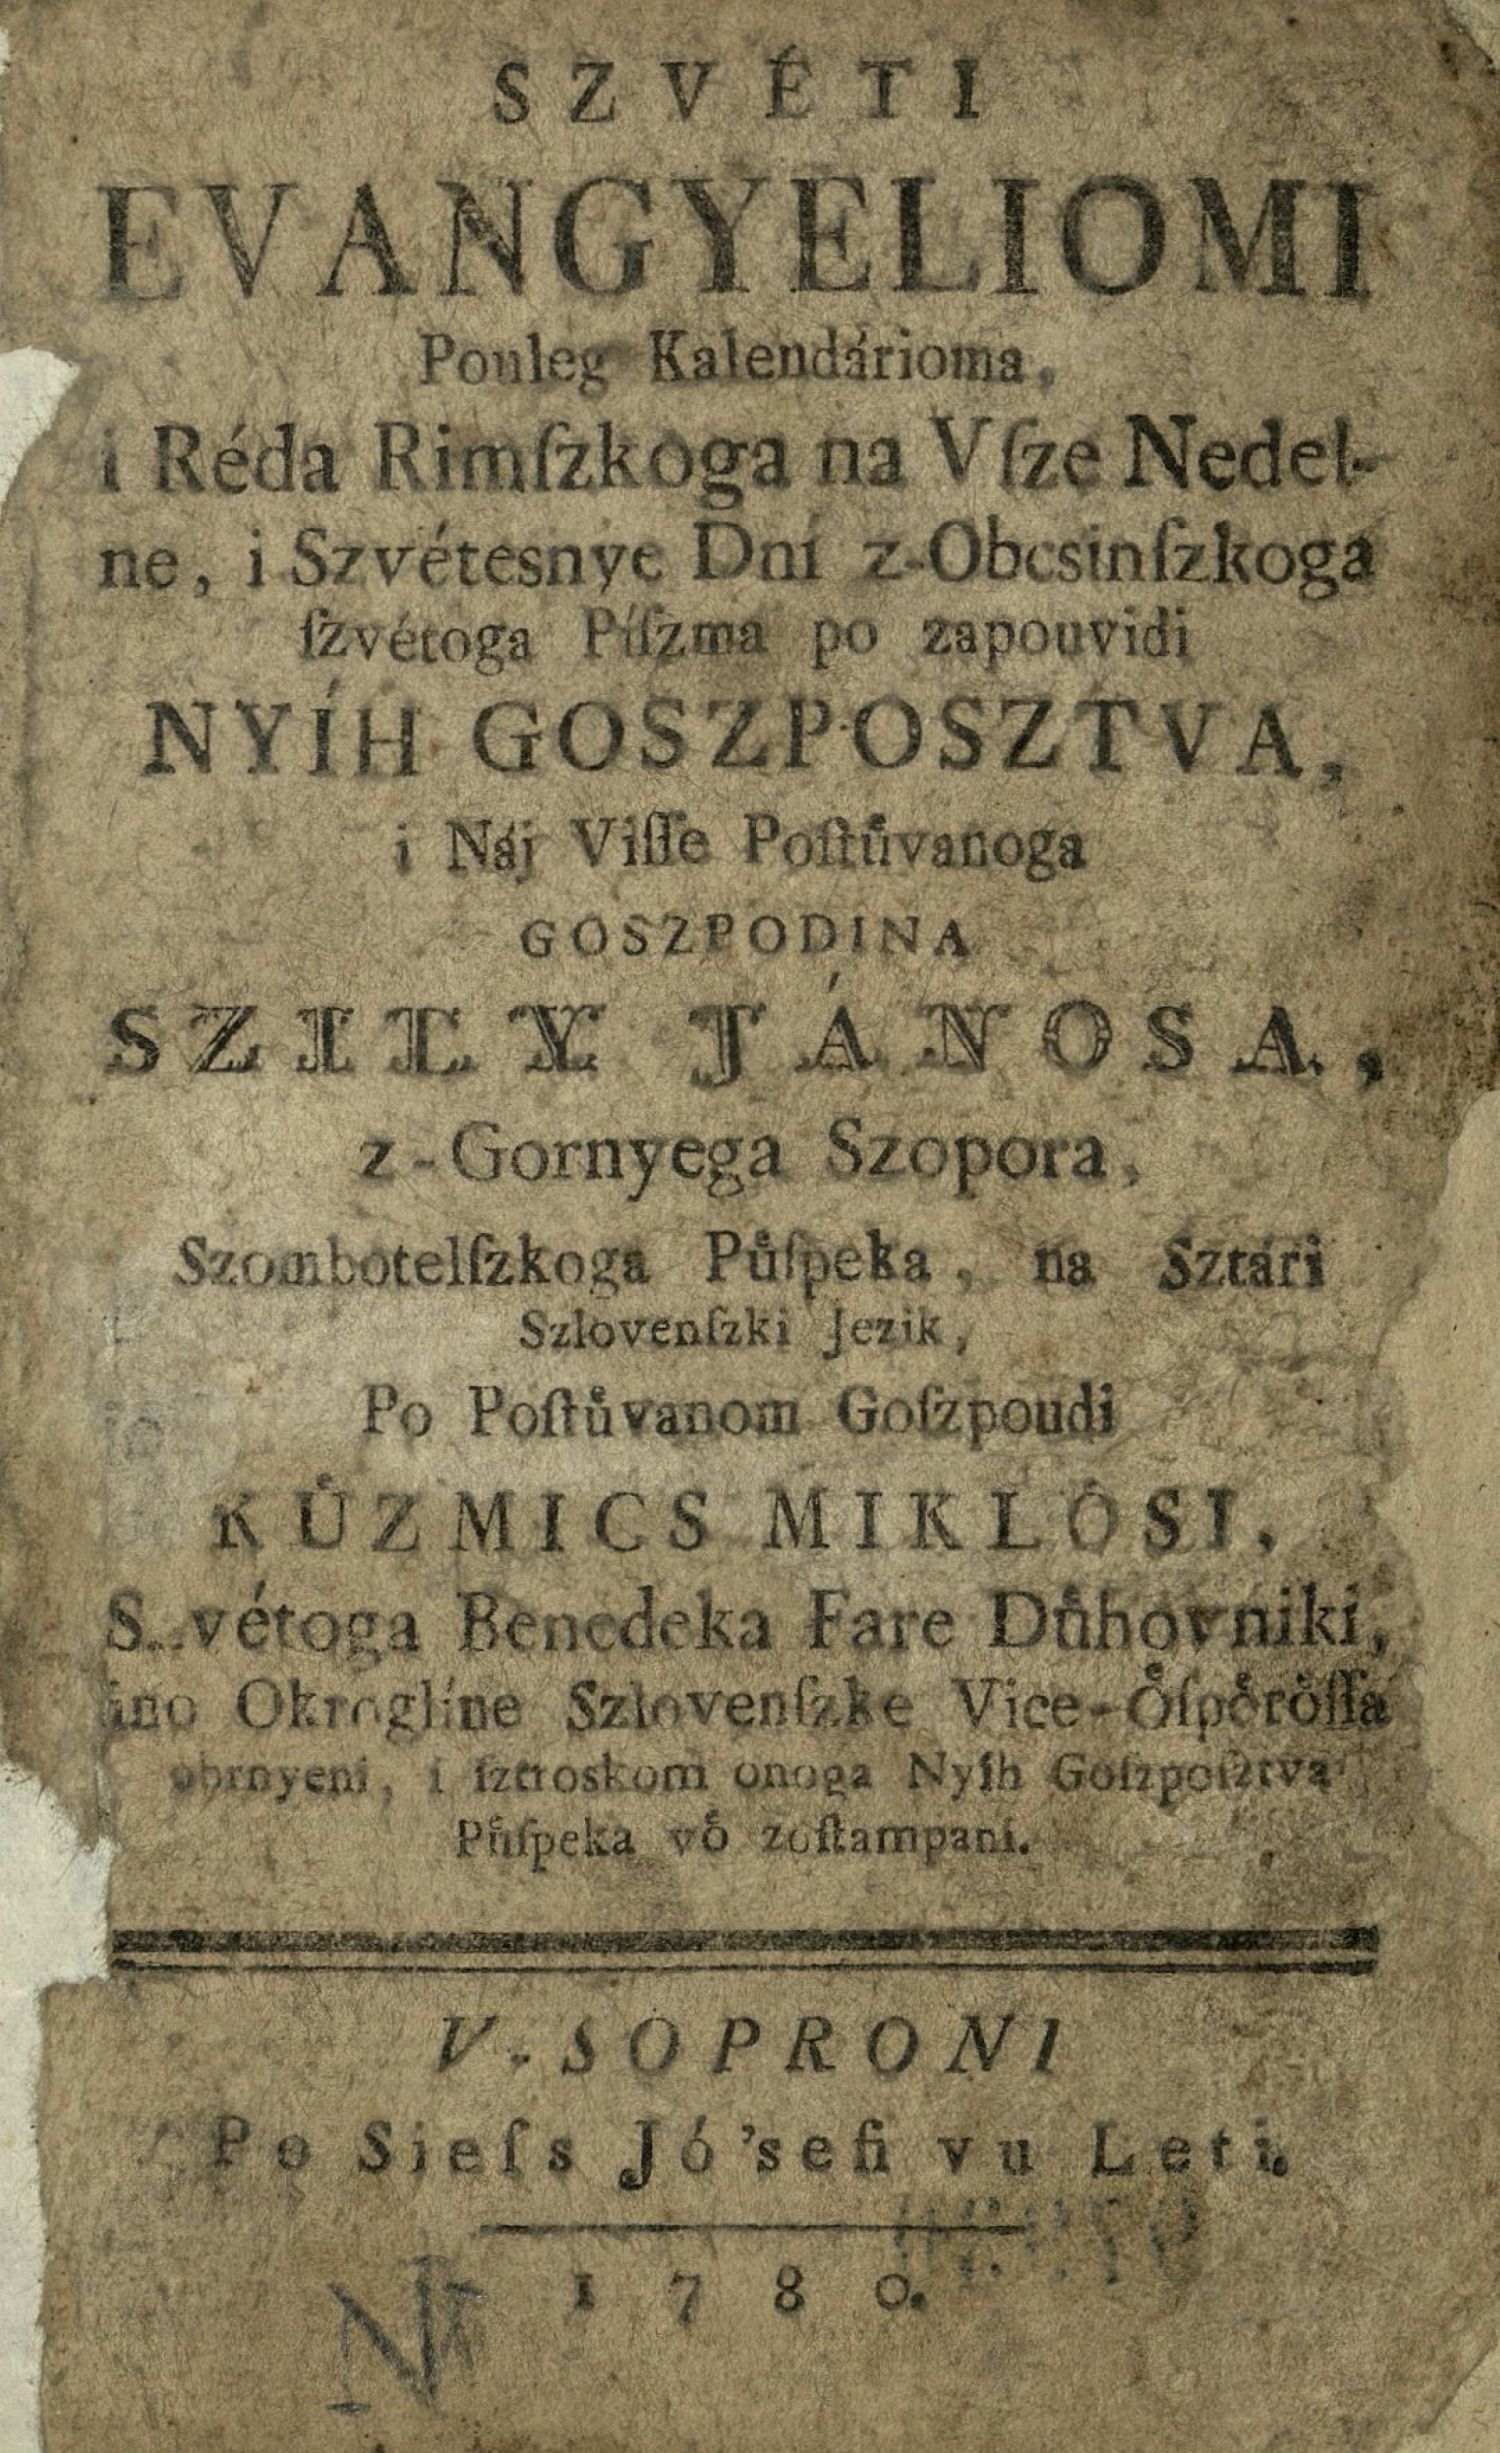 3 Szveti evangyeliomi prvi natis 1780